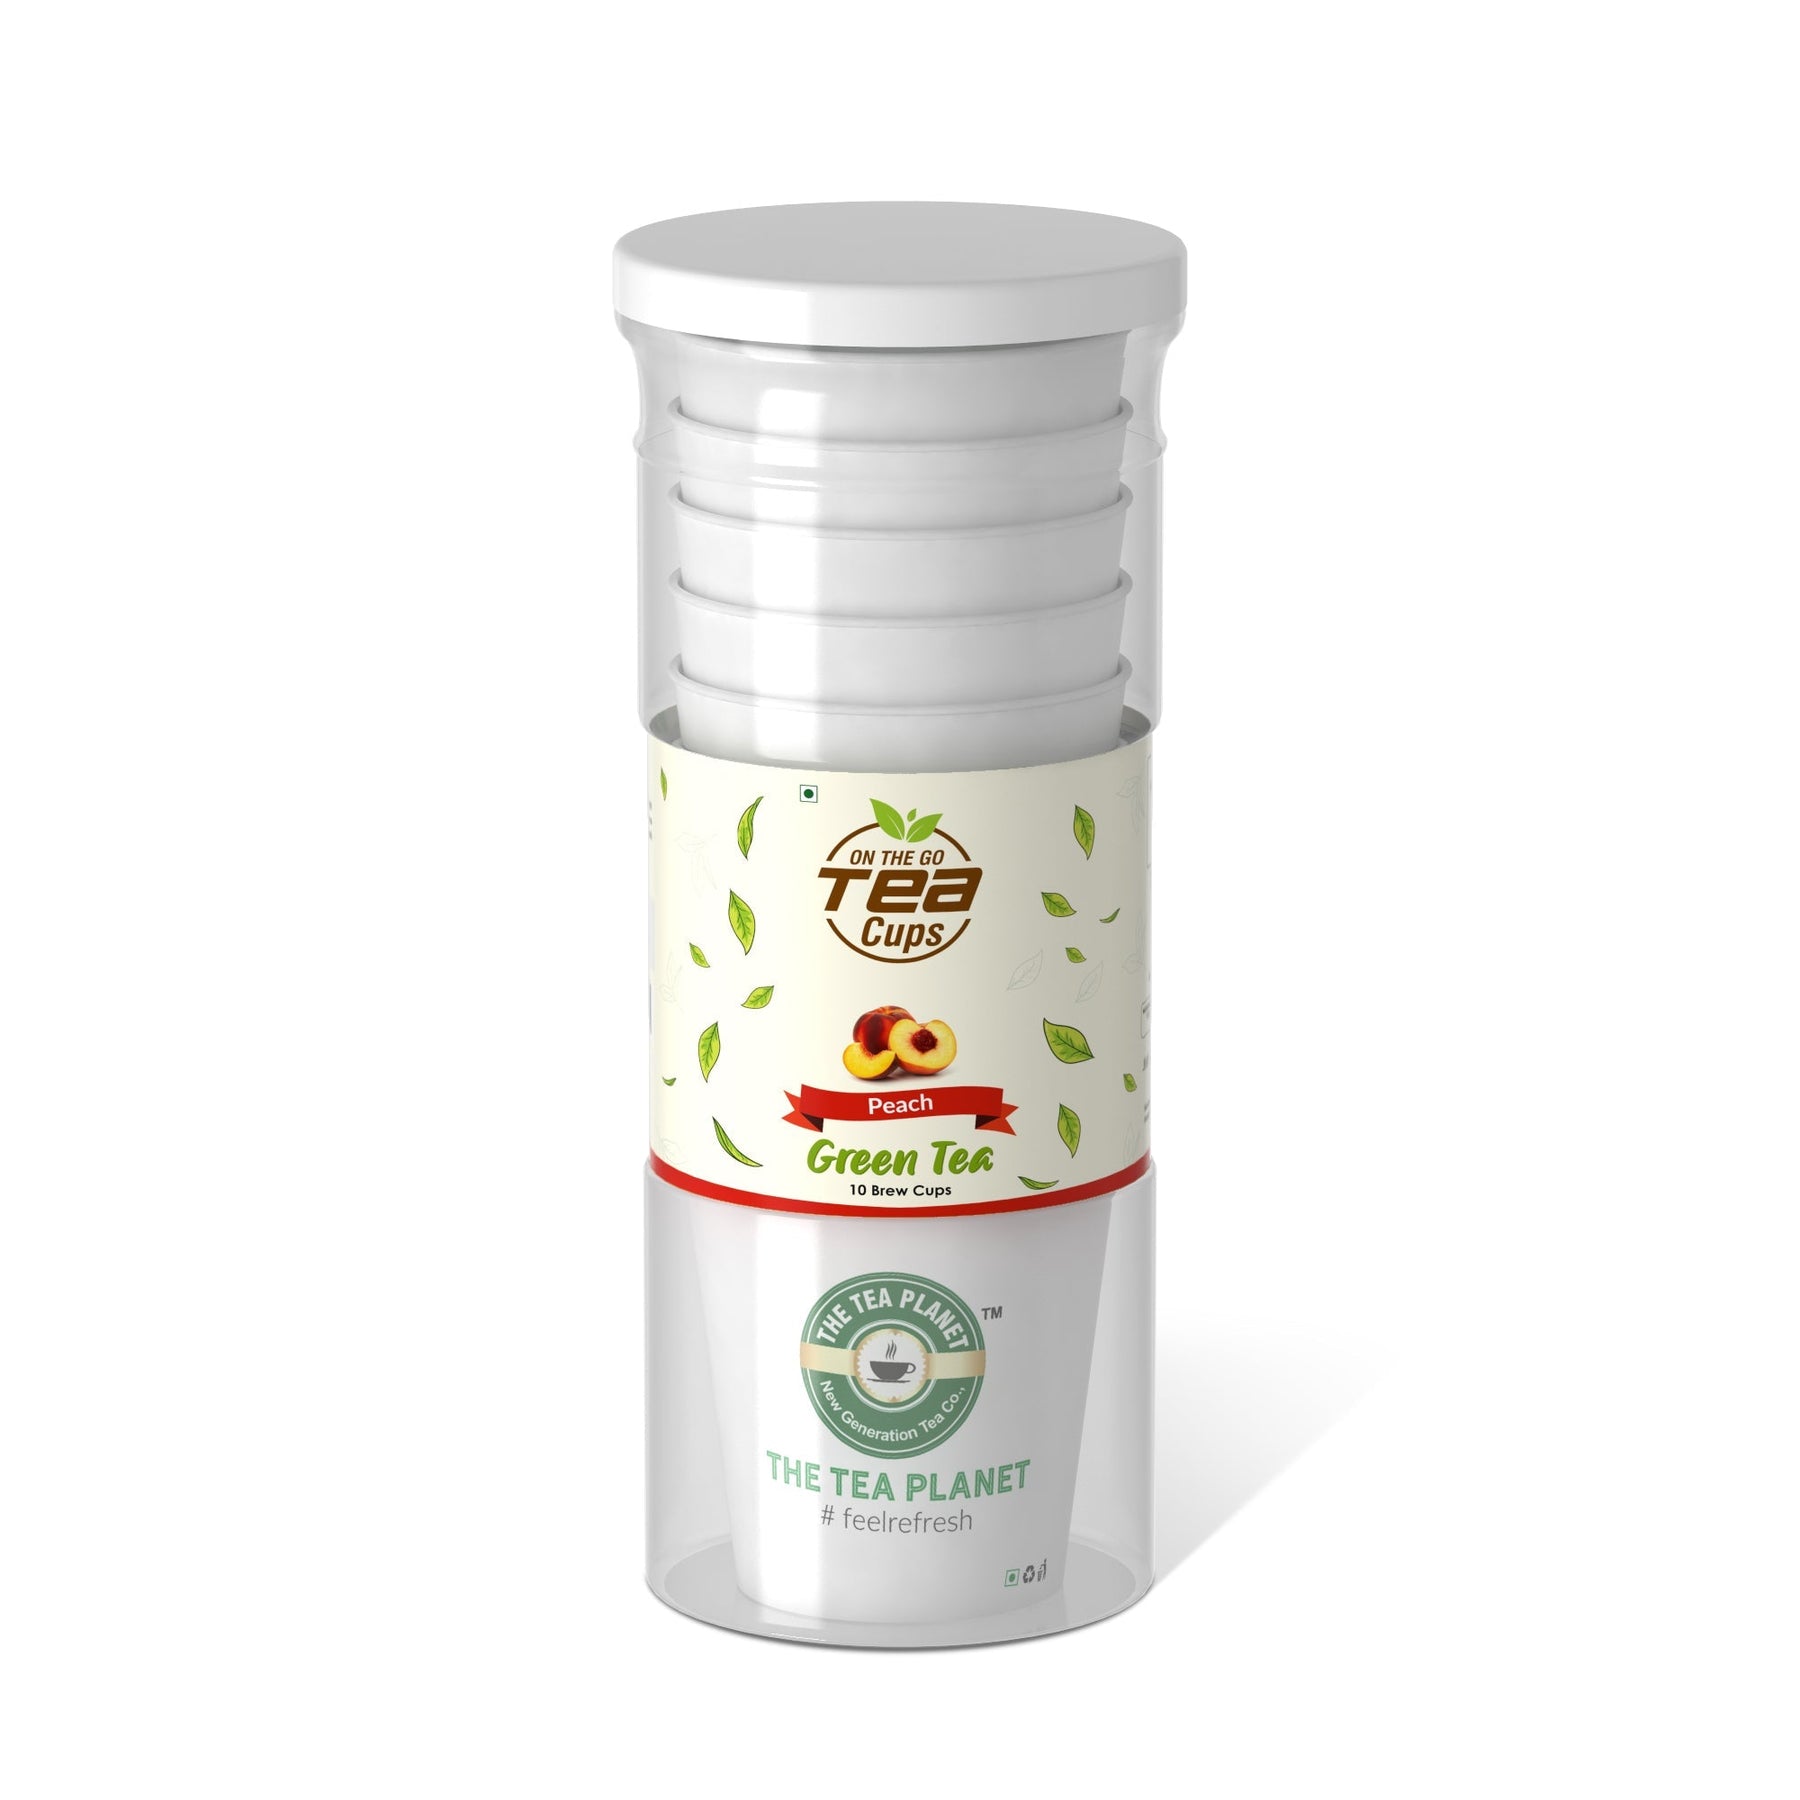 Peach Instant Green Tea Brew Cup - 20 cups